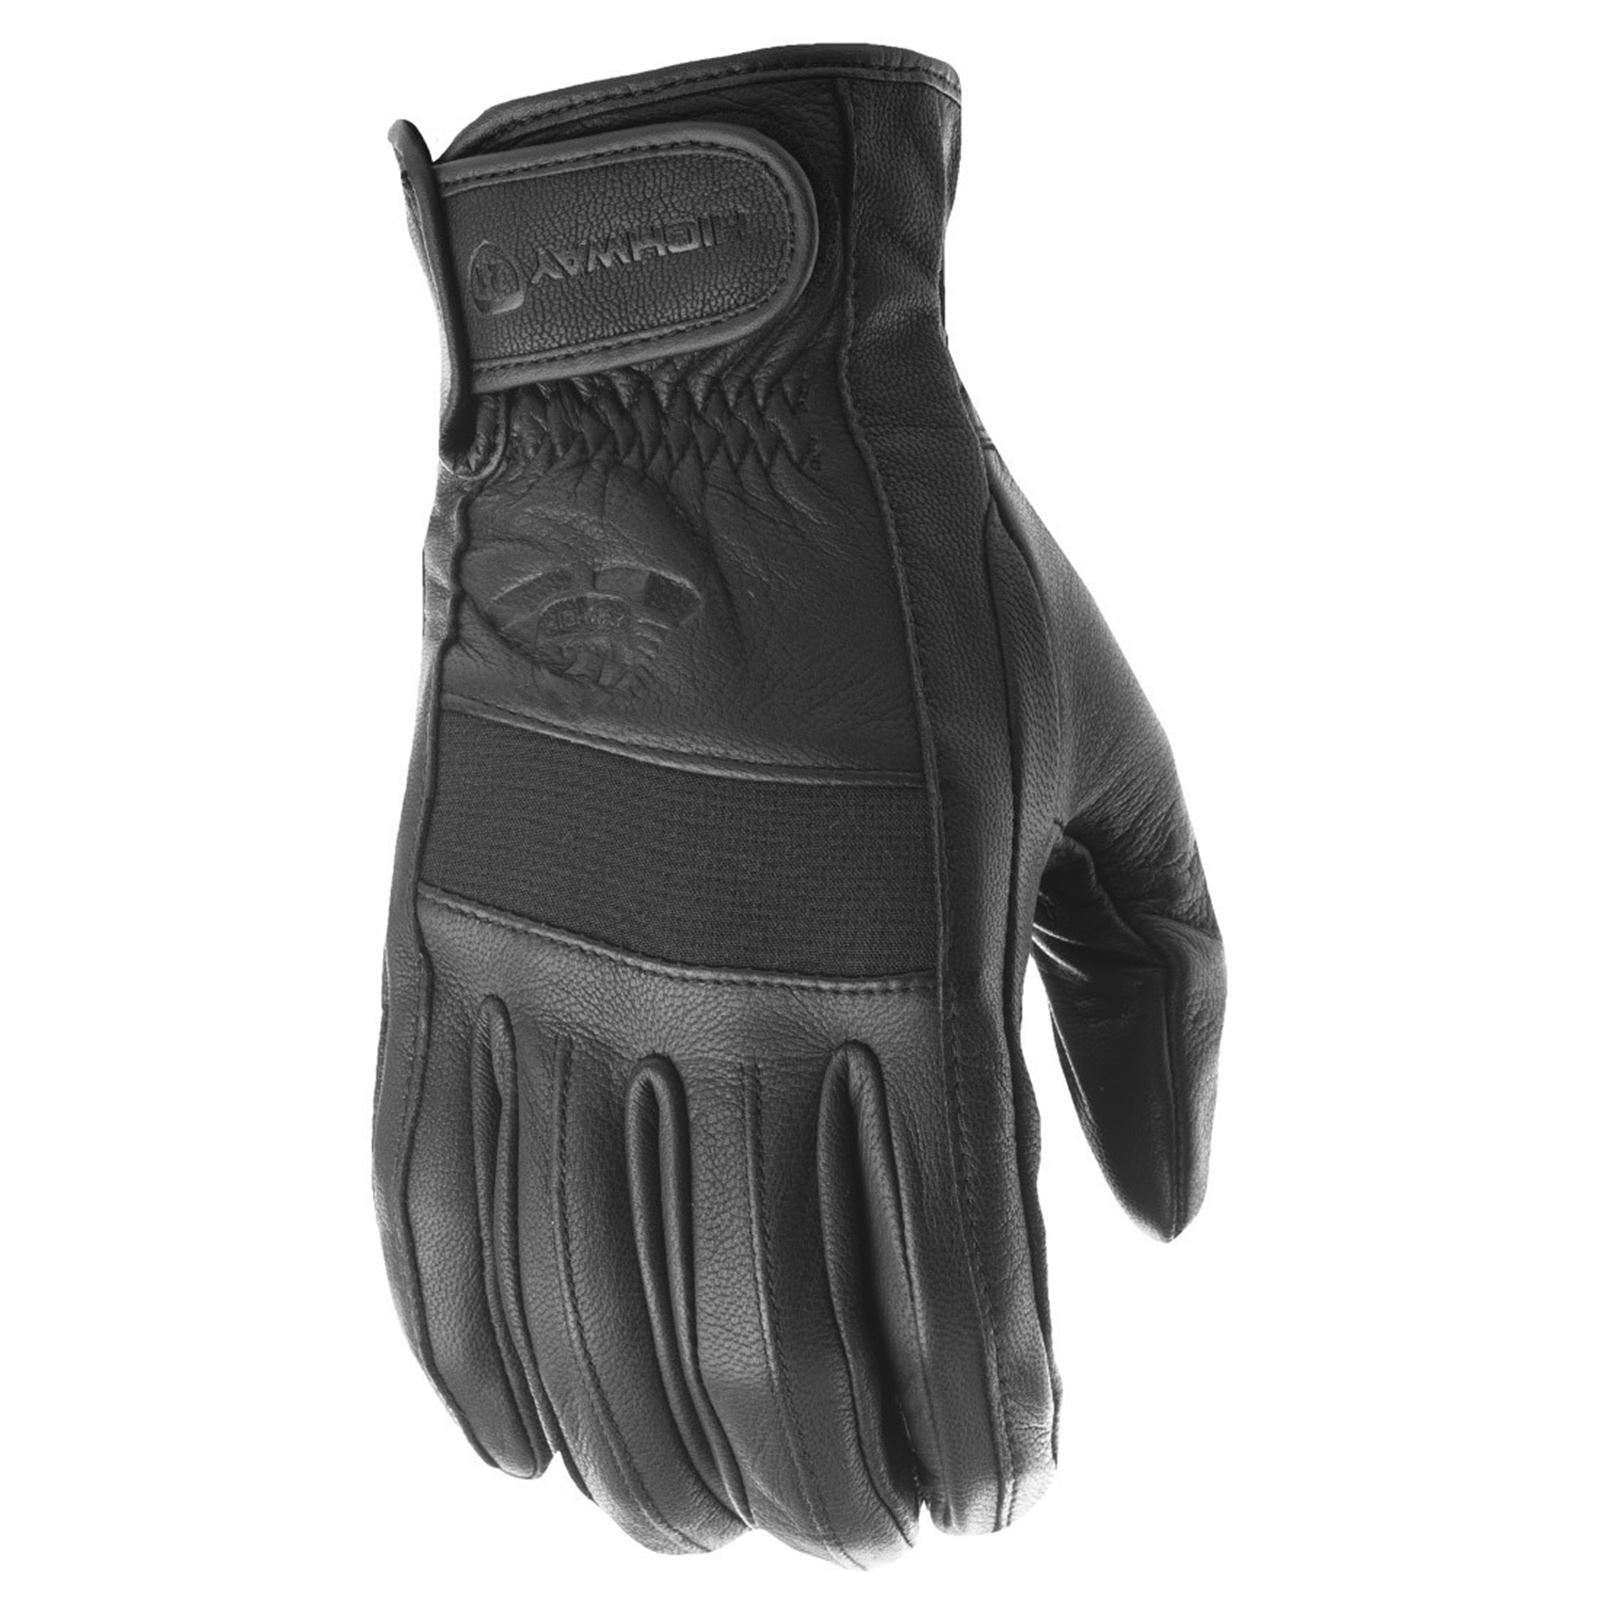 Highway 21 Jab Full Leather Gloves